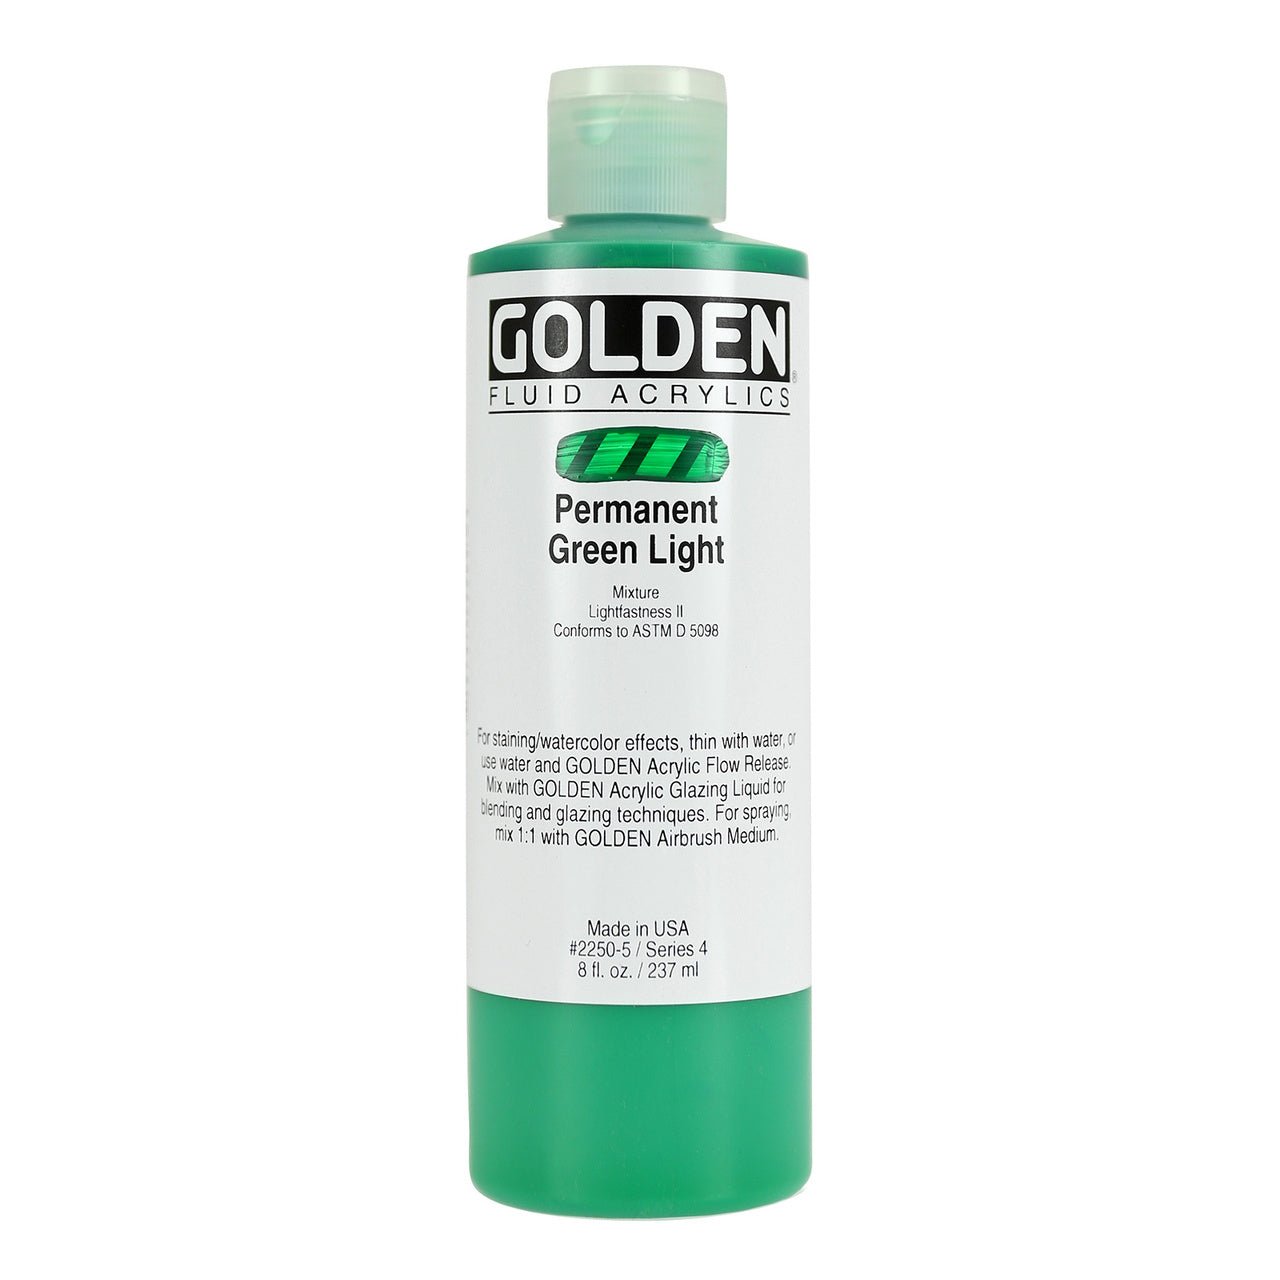 Golden Fluid Acrylic Permanent Green Light 8 oz - merriartist.com